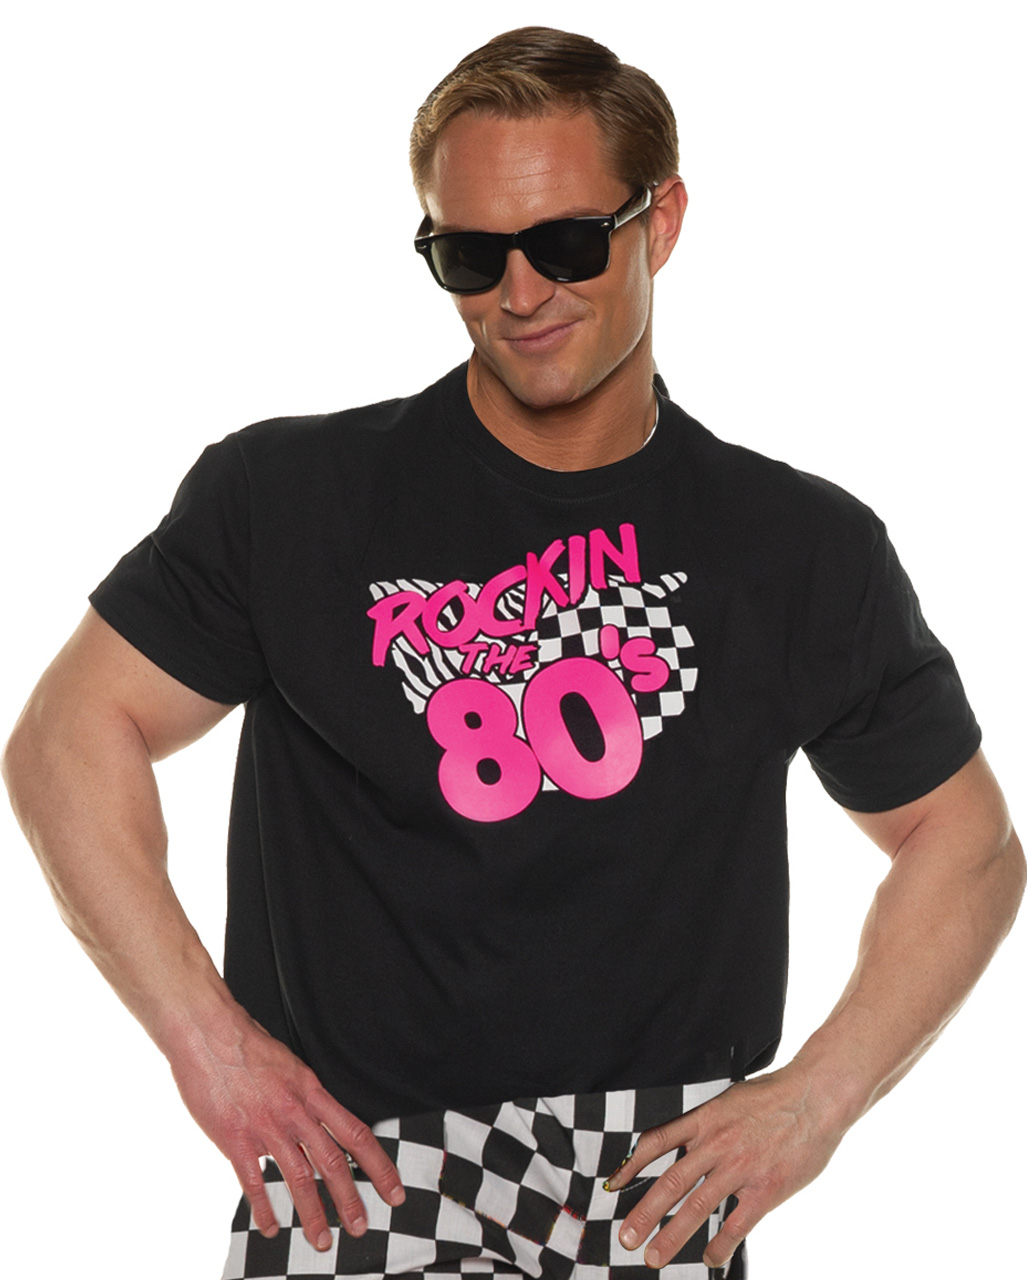 Fremsyn snack evne Rockin The 80`s T-Shirt ▷ Motto Accessories | Horror-Shop.com